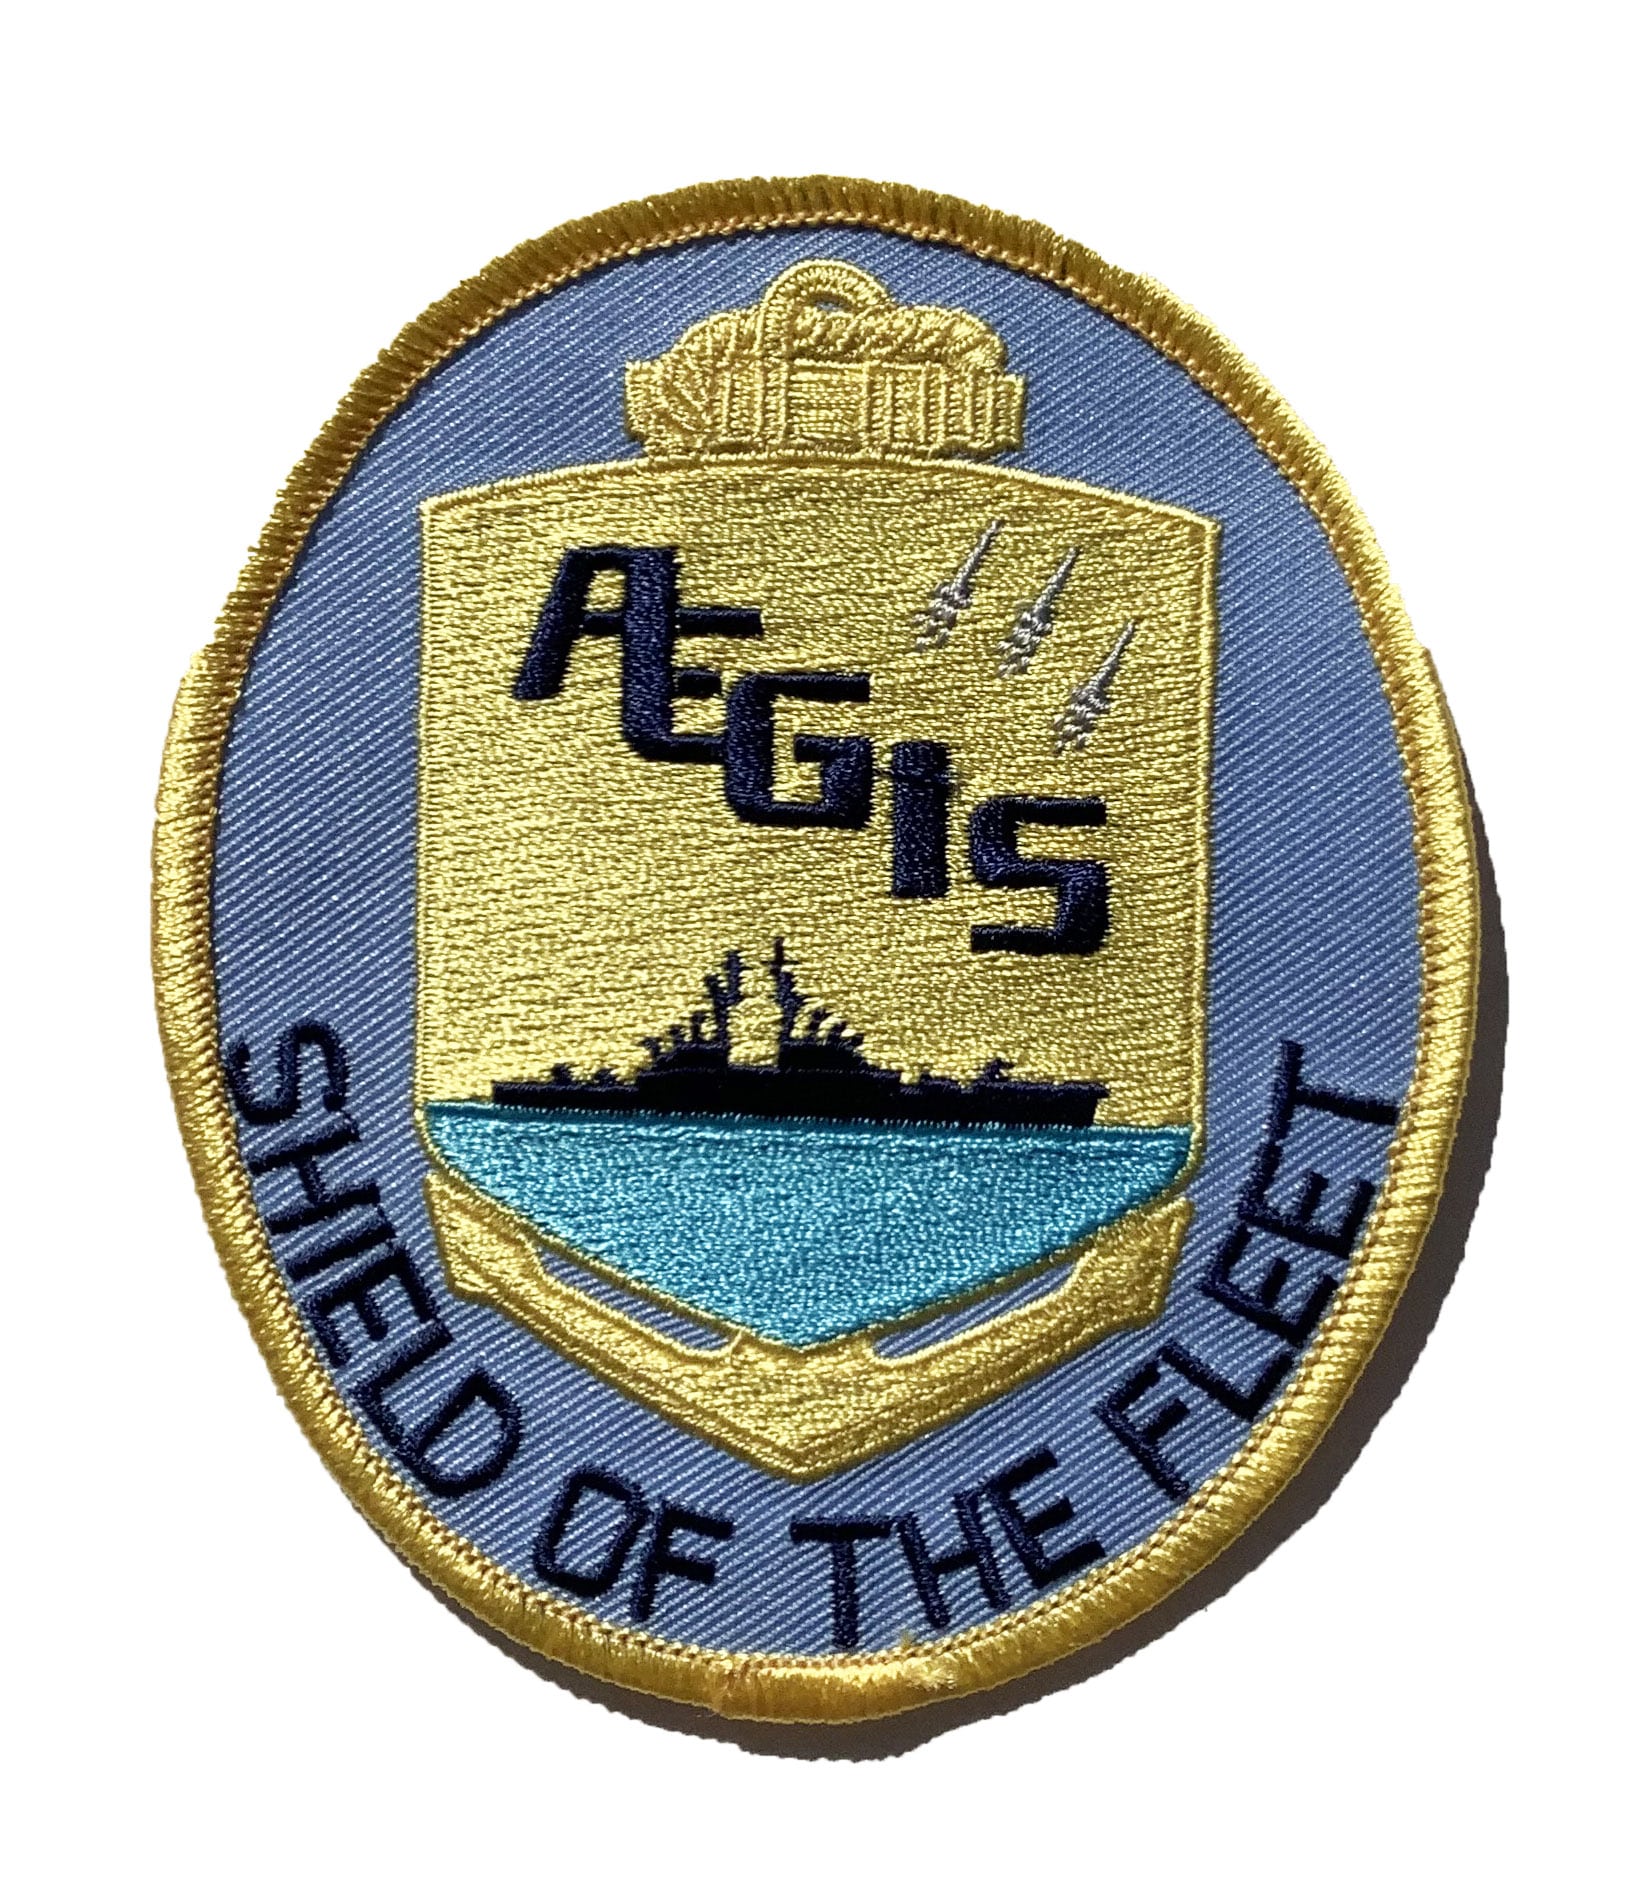 Aegis Shield of the Fleet Patch